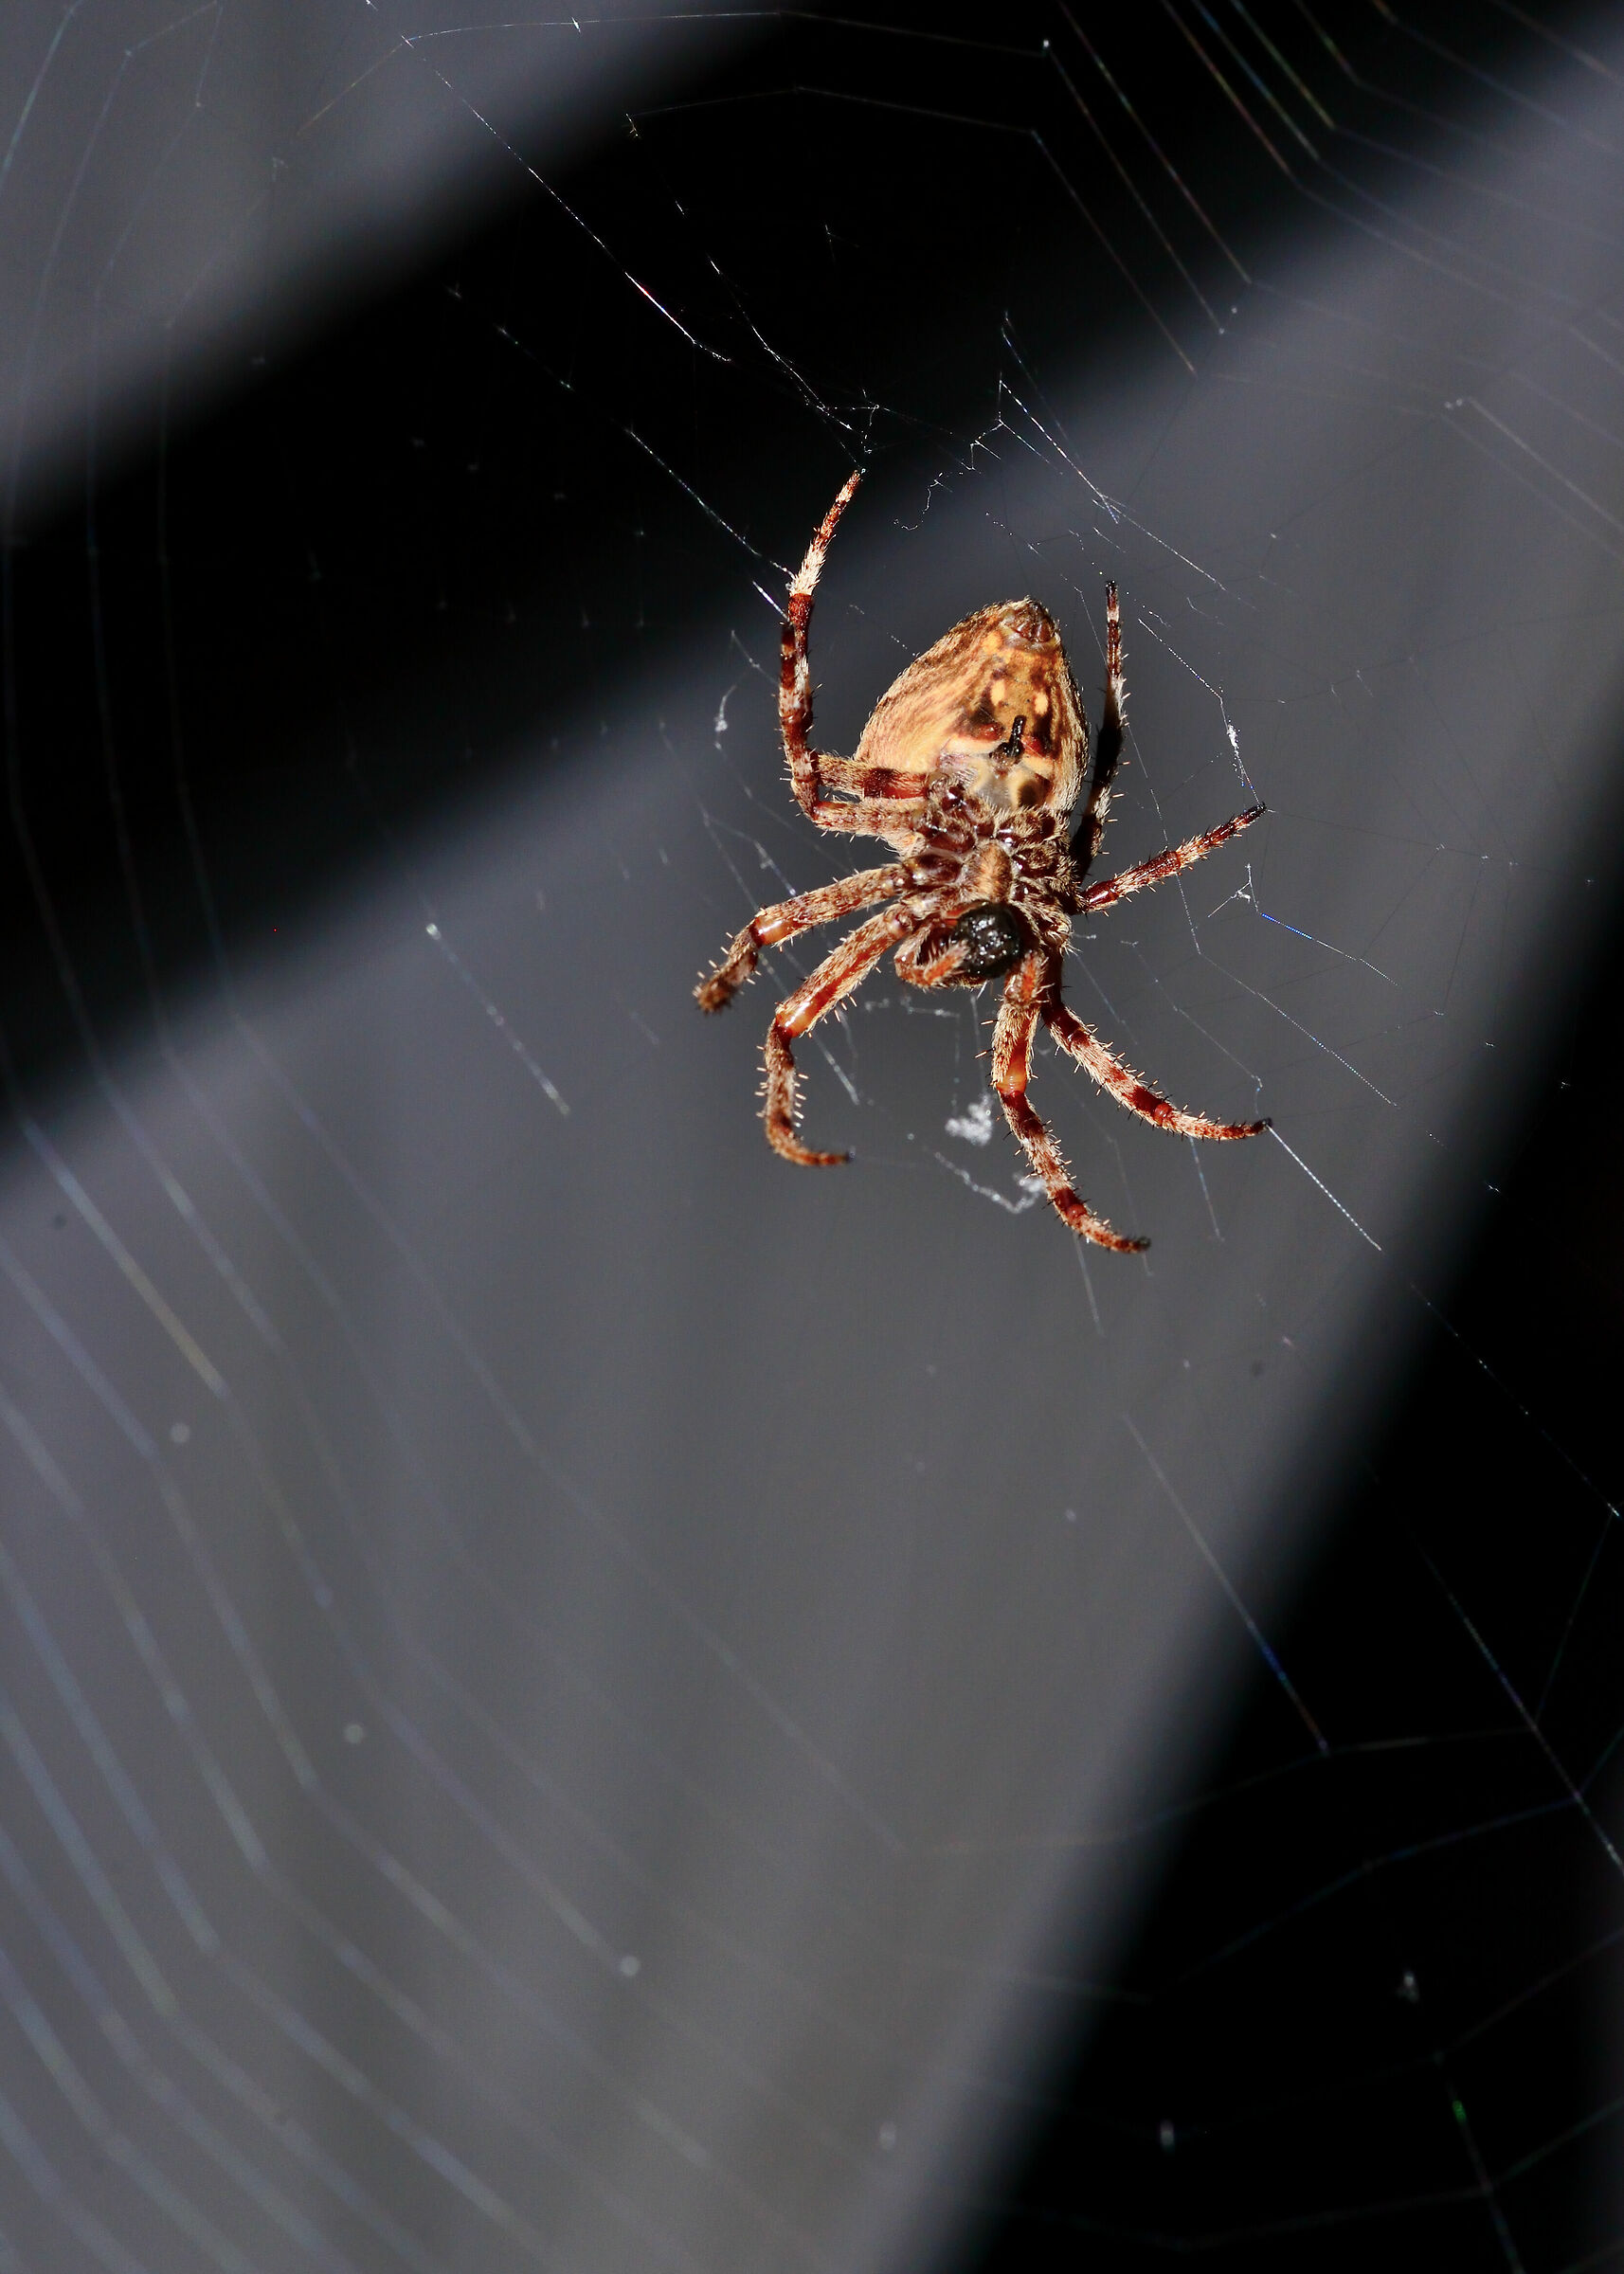 Spider by night - Side B...